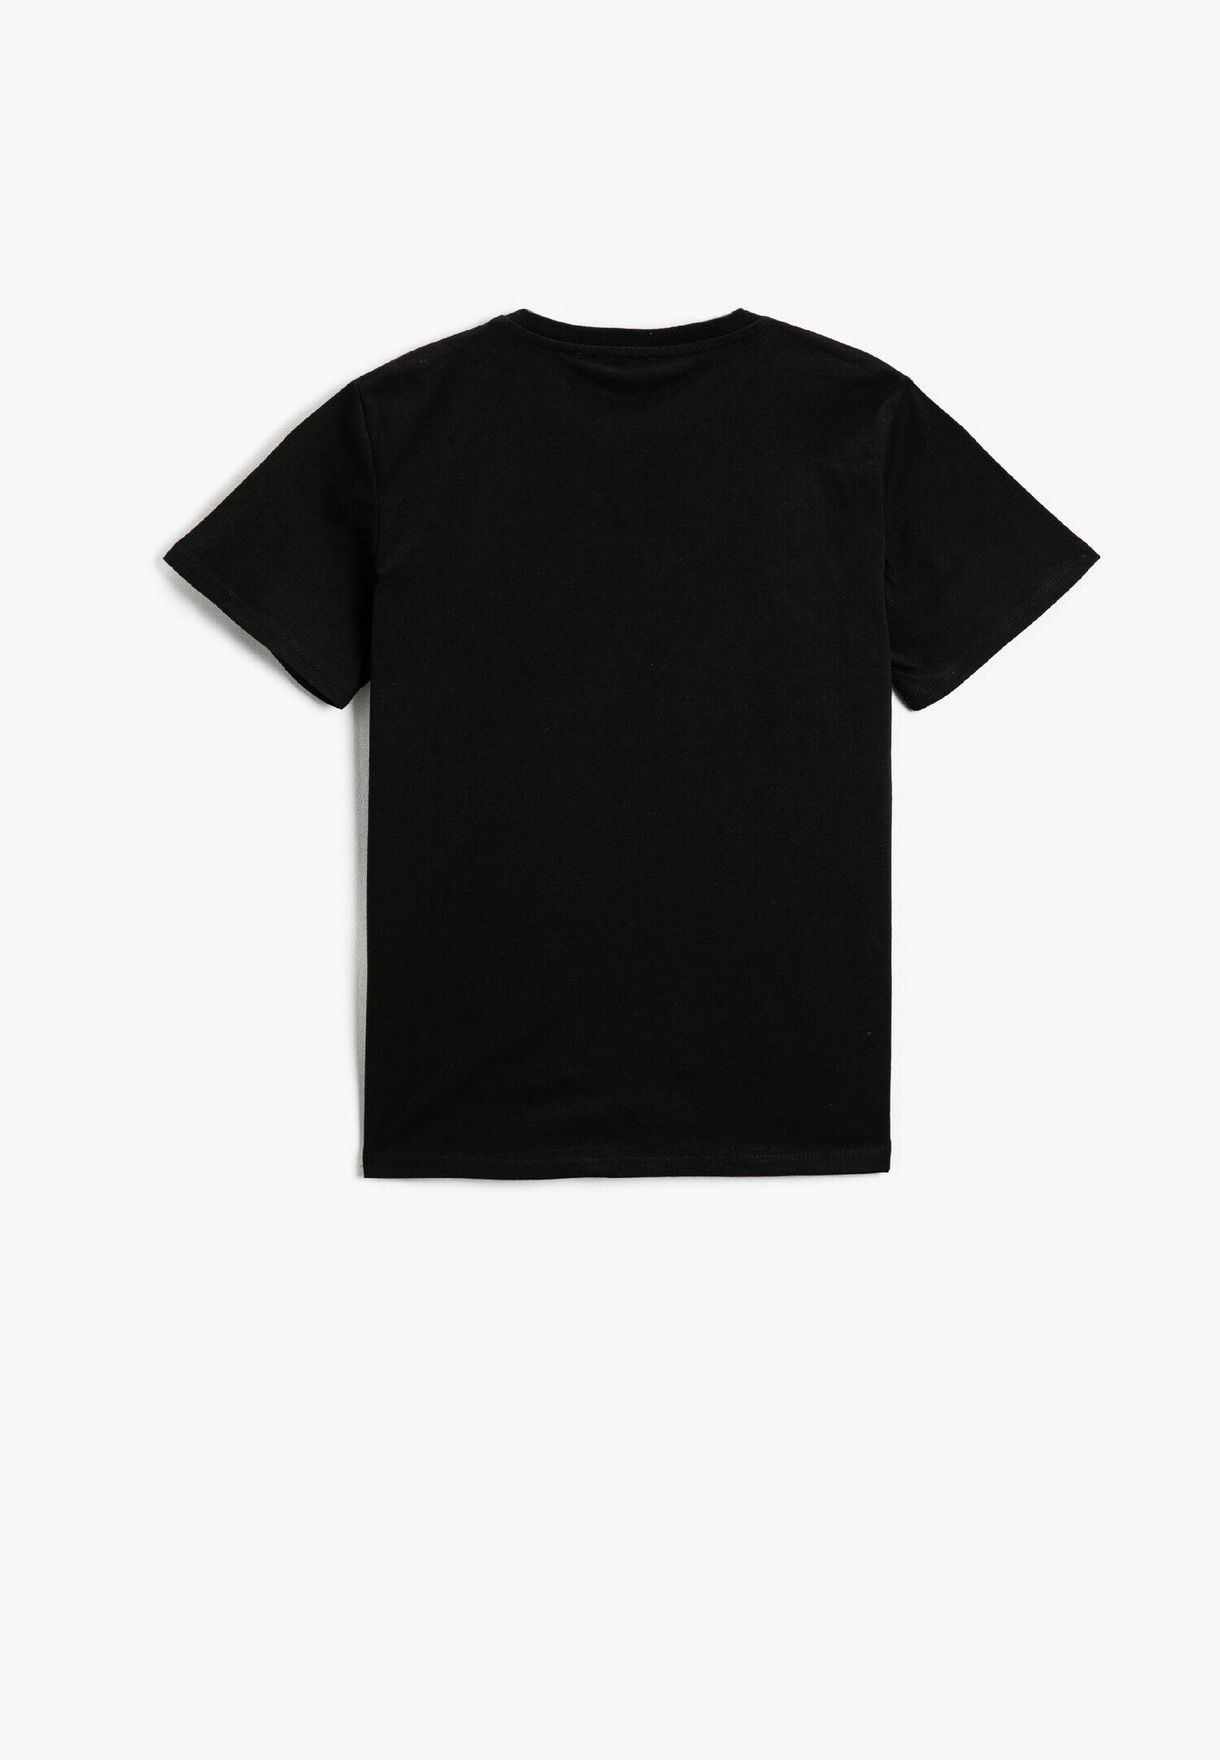 Animal Printed Short Sleeve T-Shirt Cotton